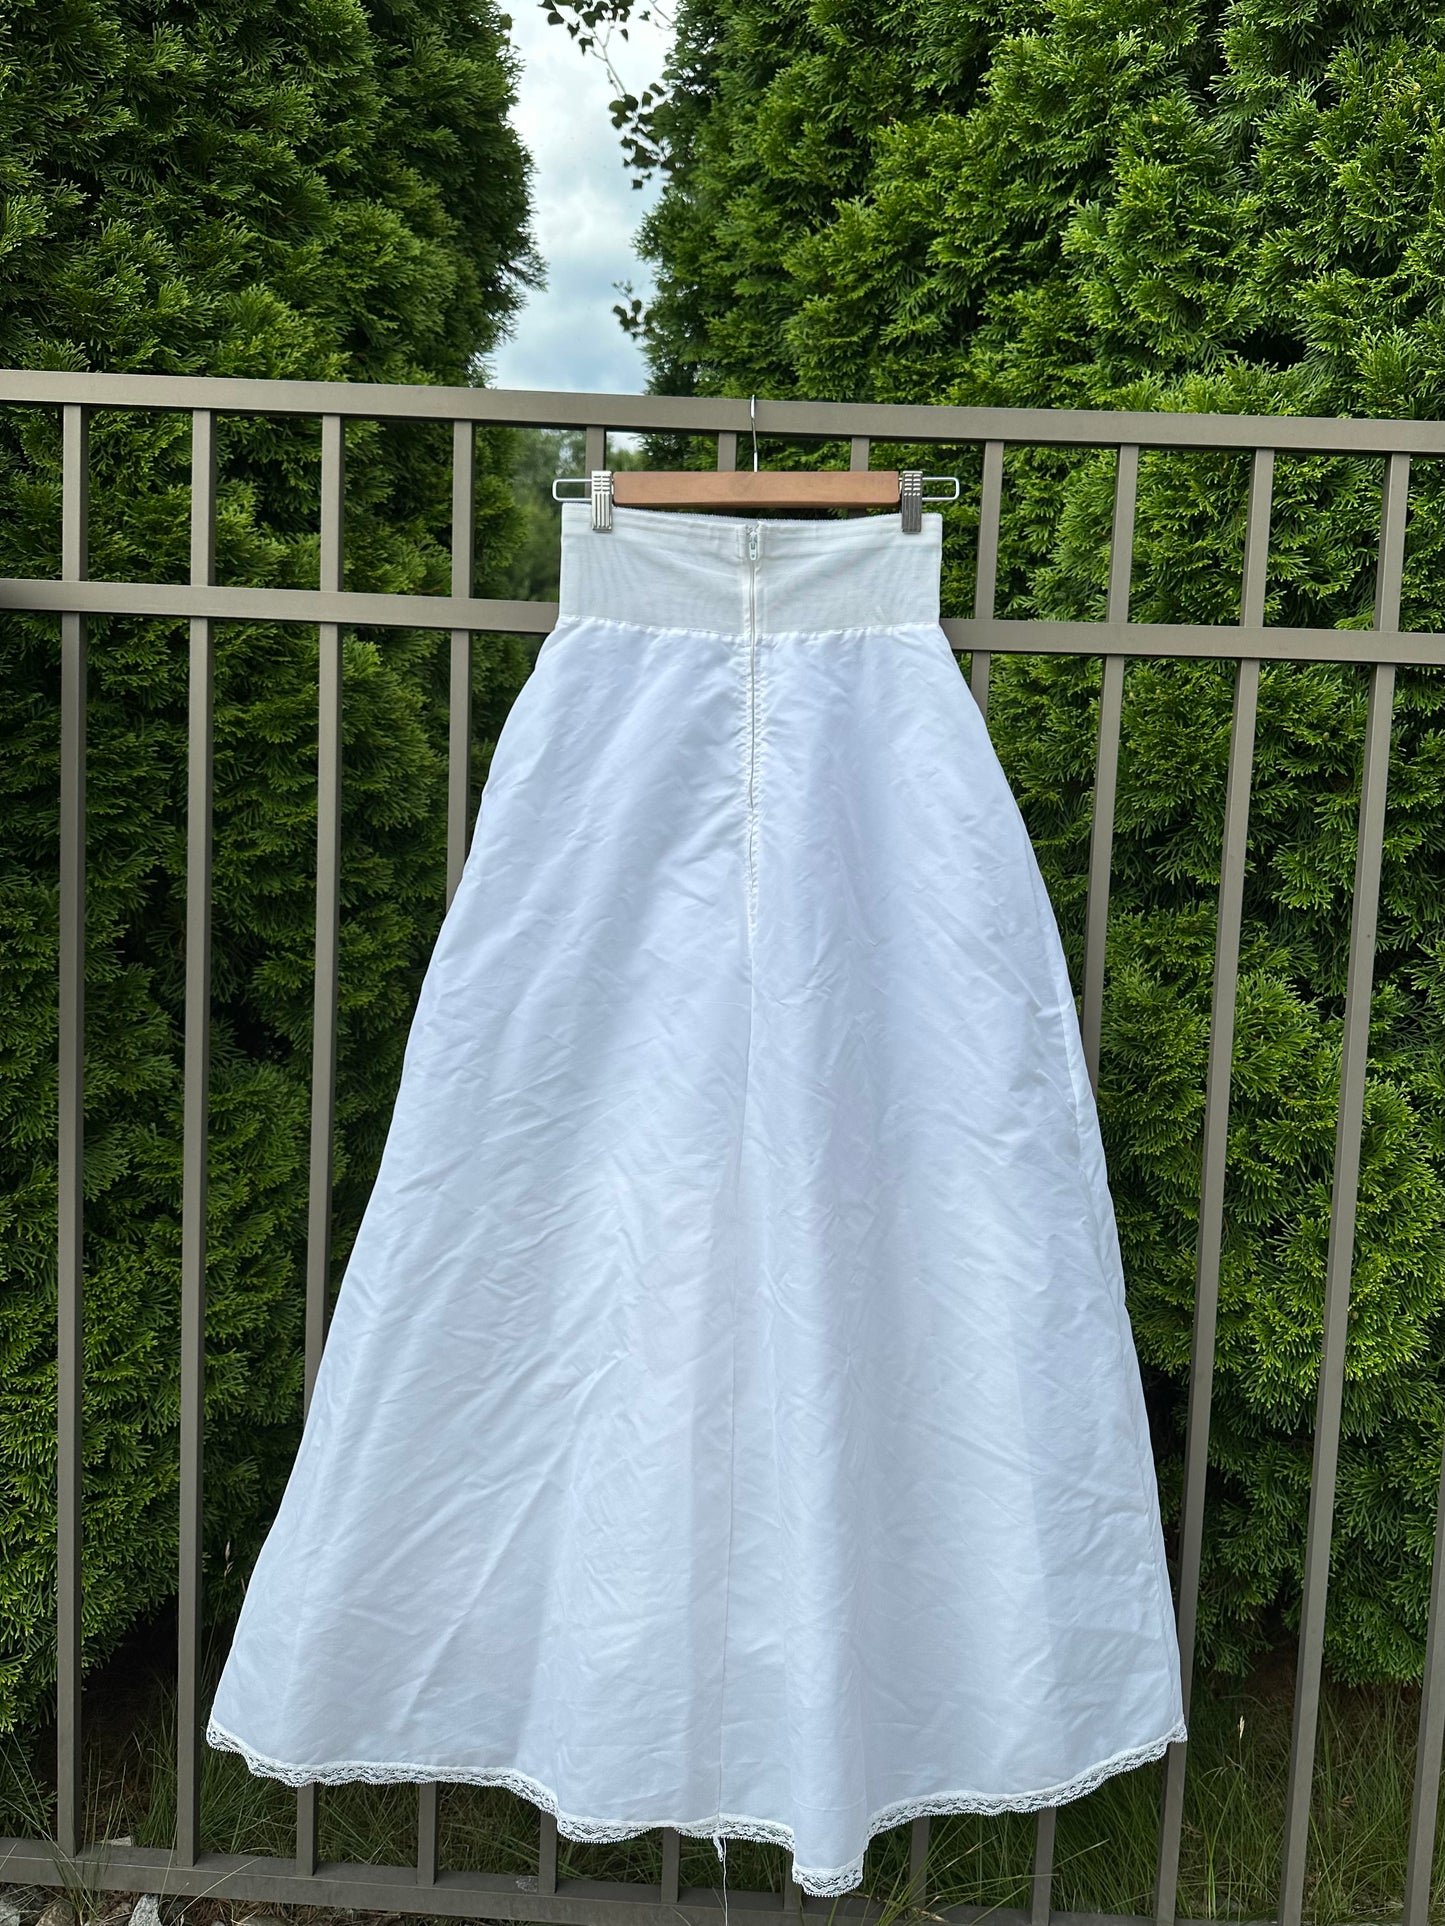 Petticoat Underskirt